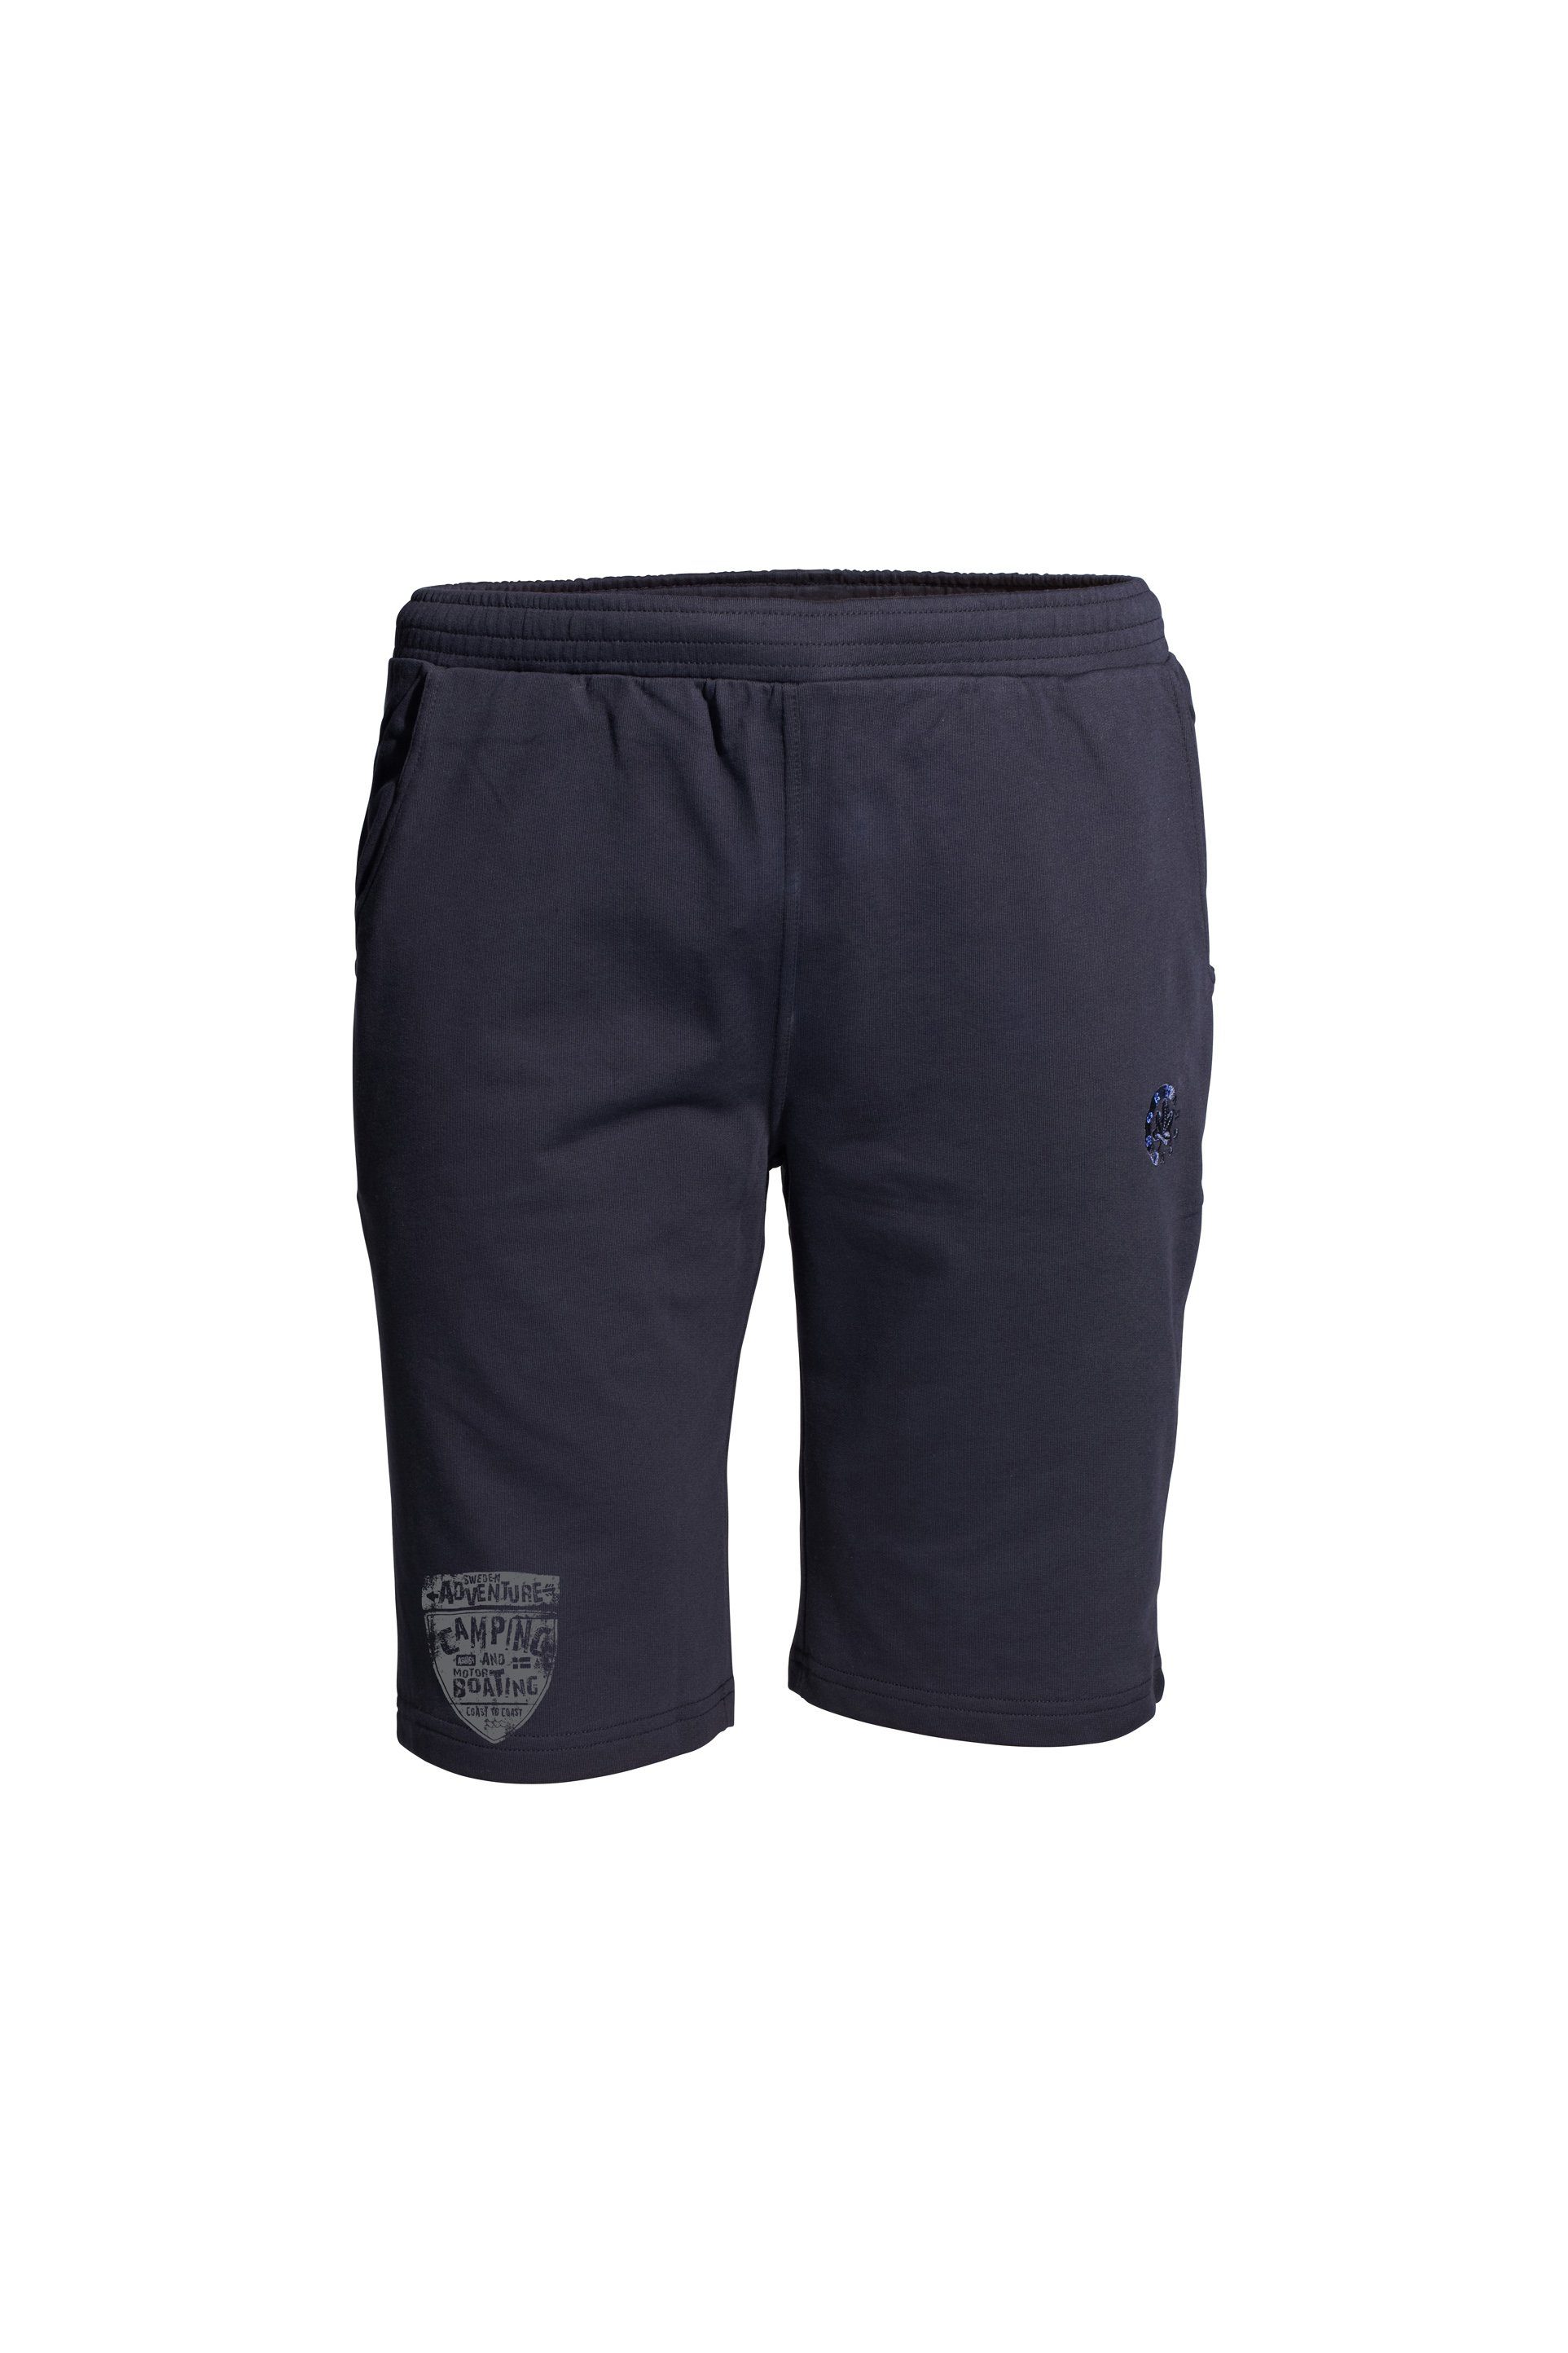 blau am Bein SPORTSWEAR Shorts mit sportlichem AHORN Print CAMPING